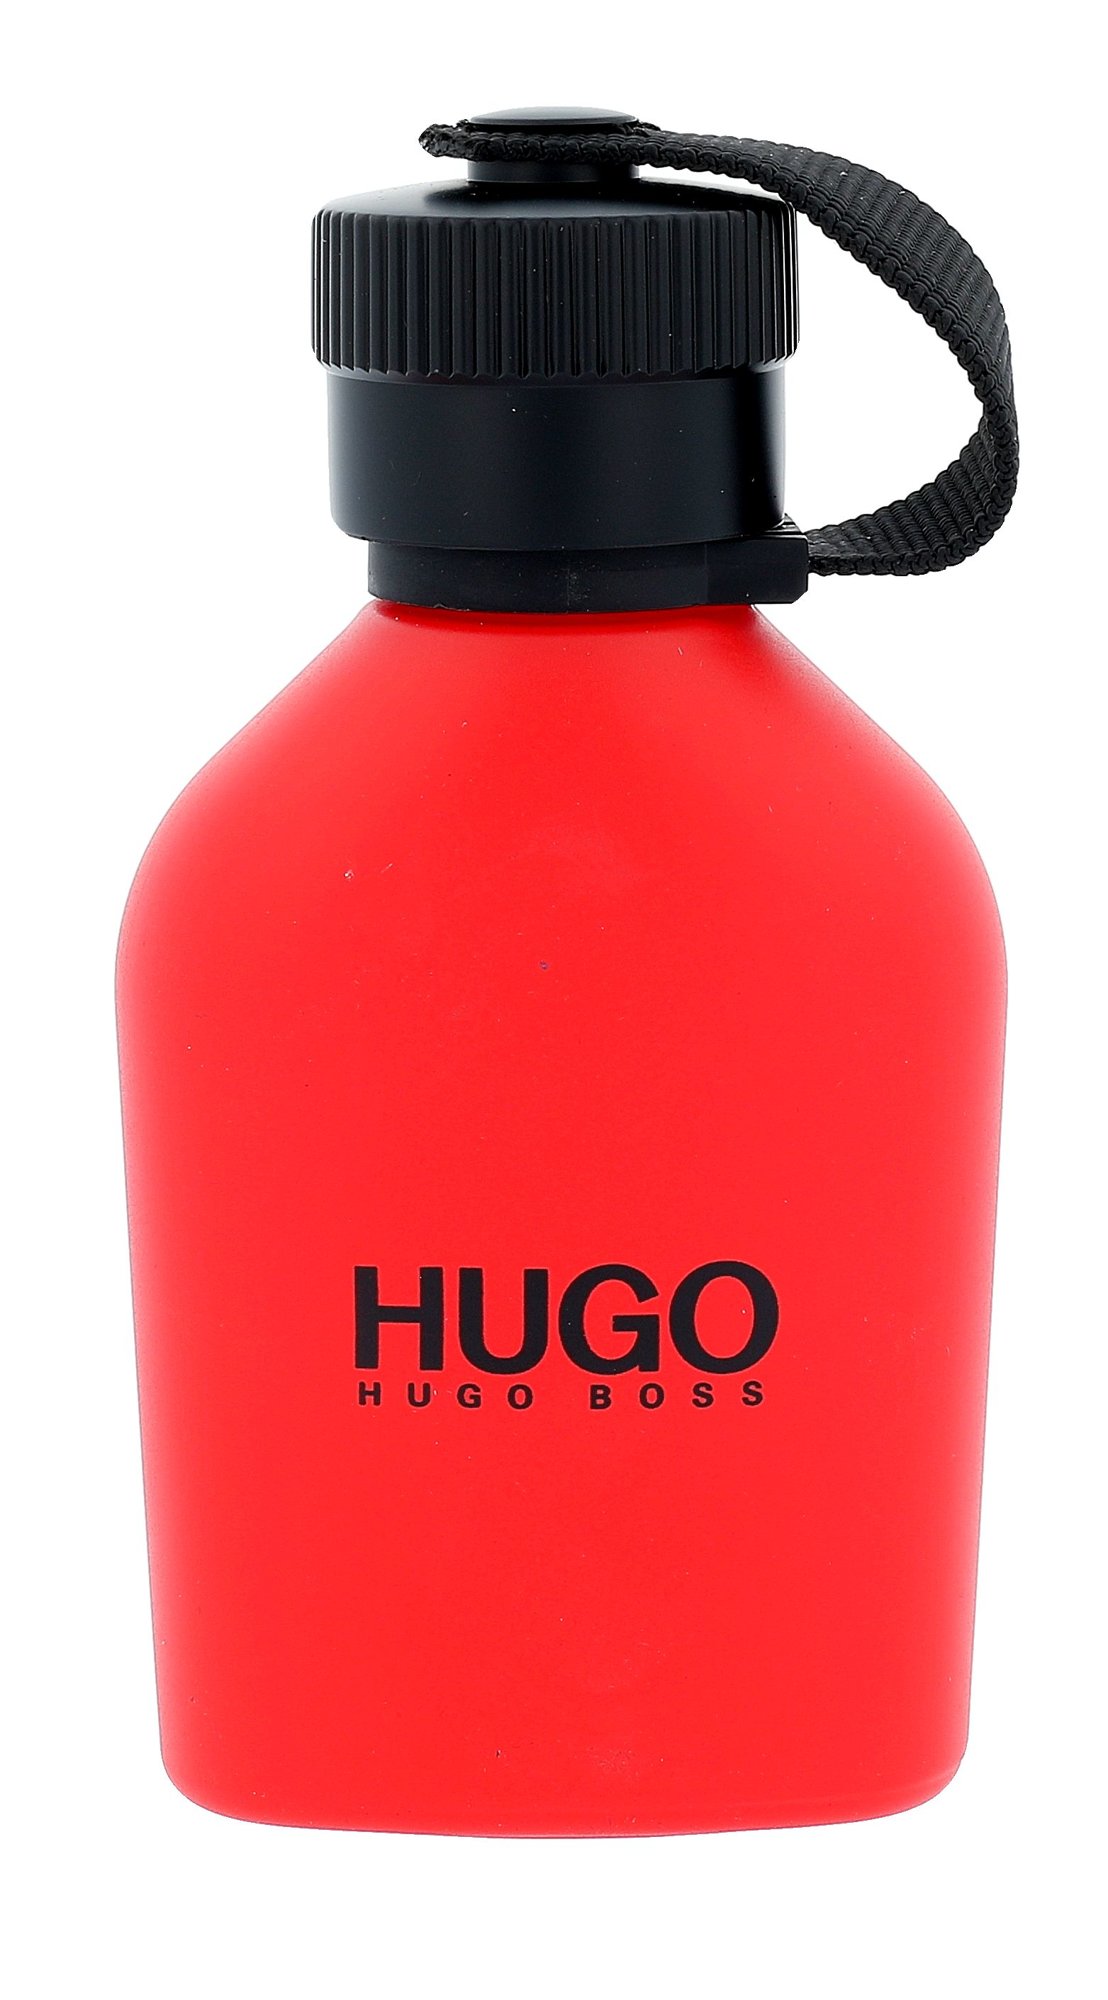 HUGO BOSS Hugo Red, Toaletní voda 75ml